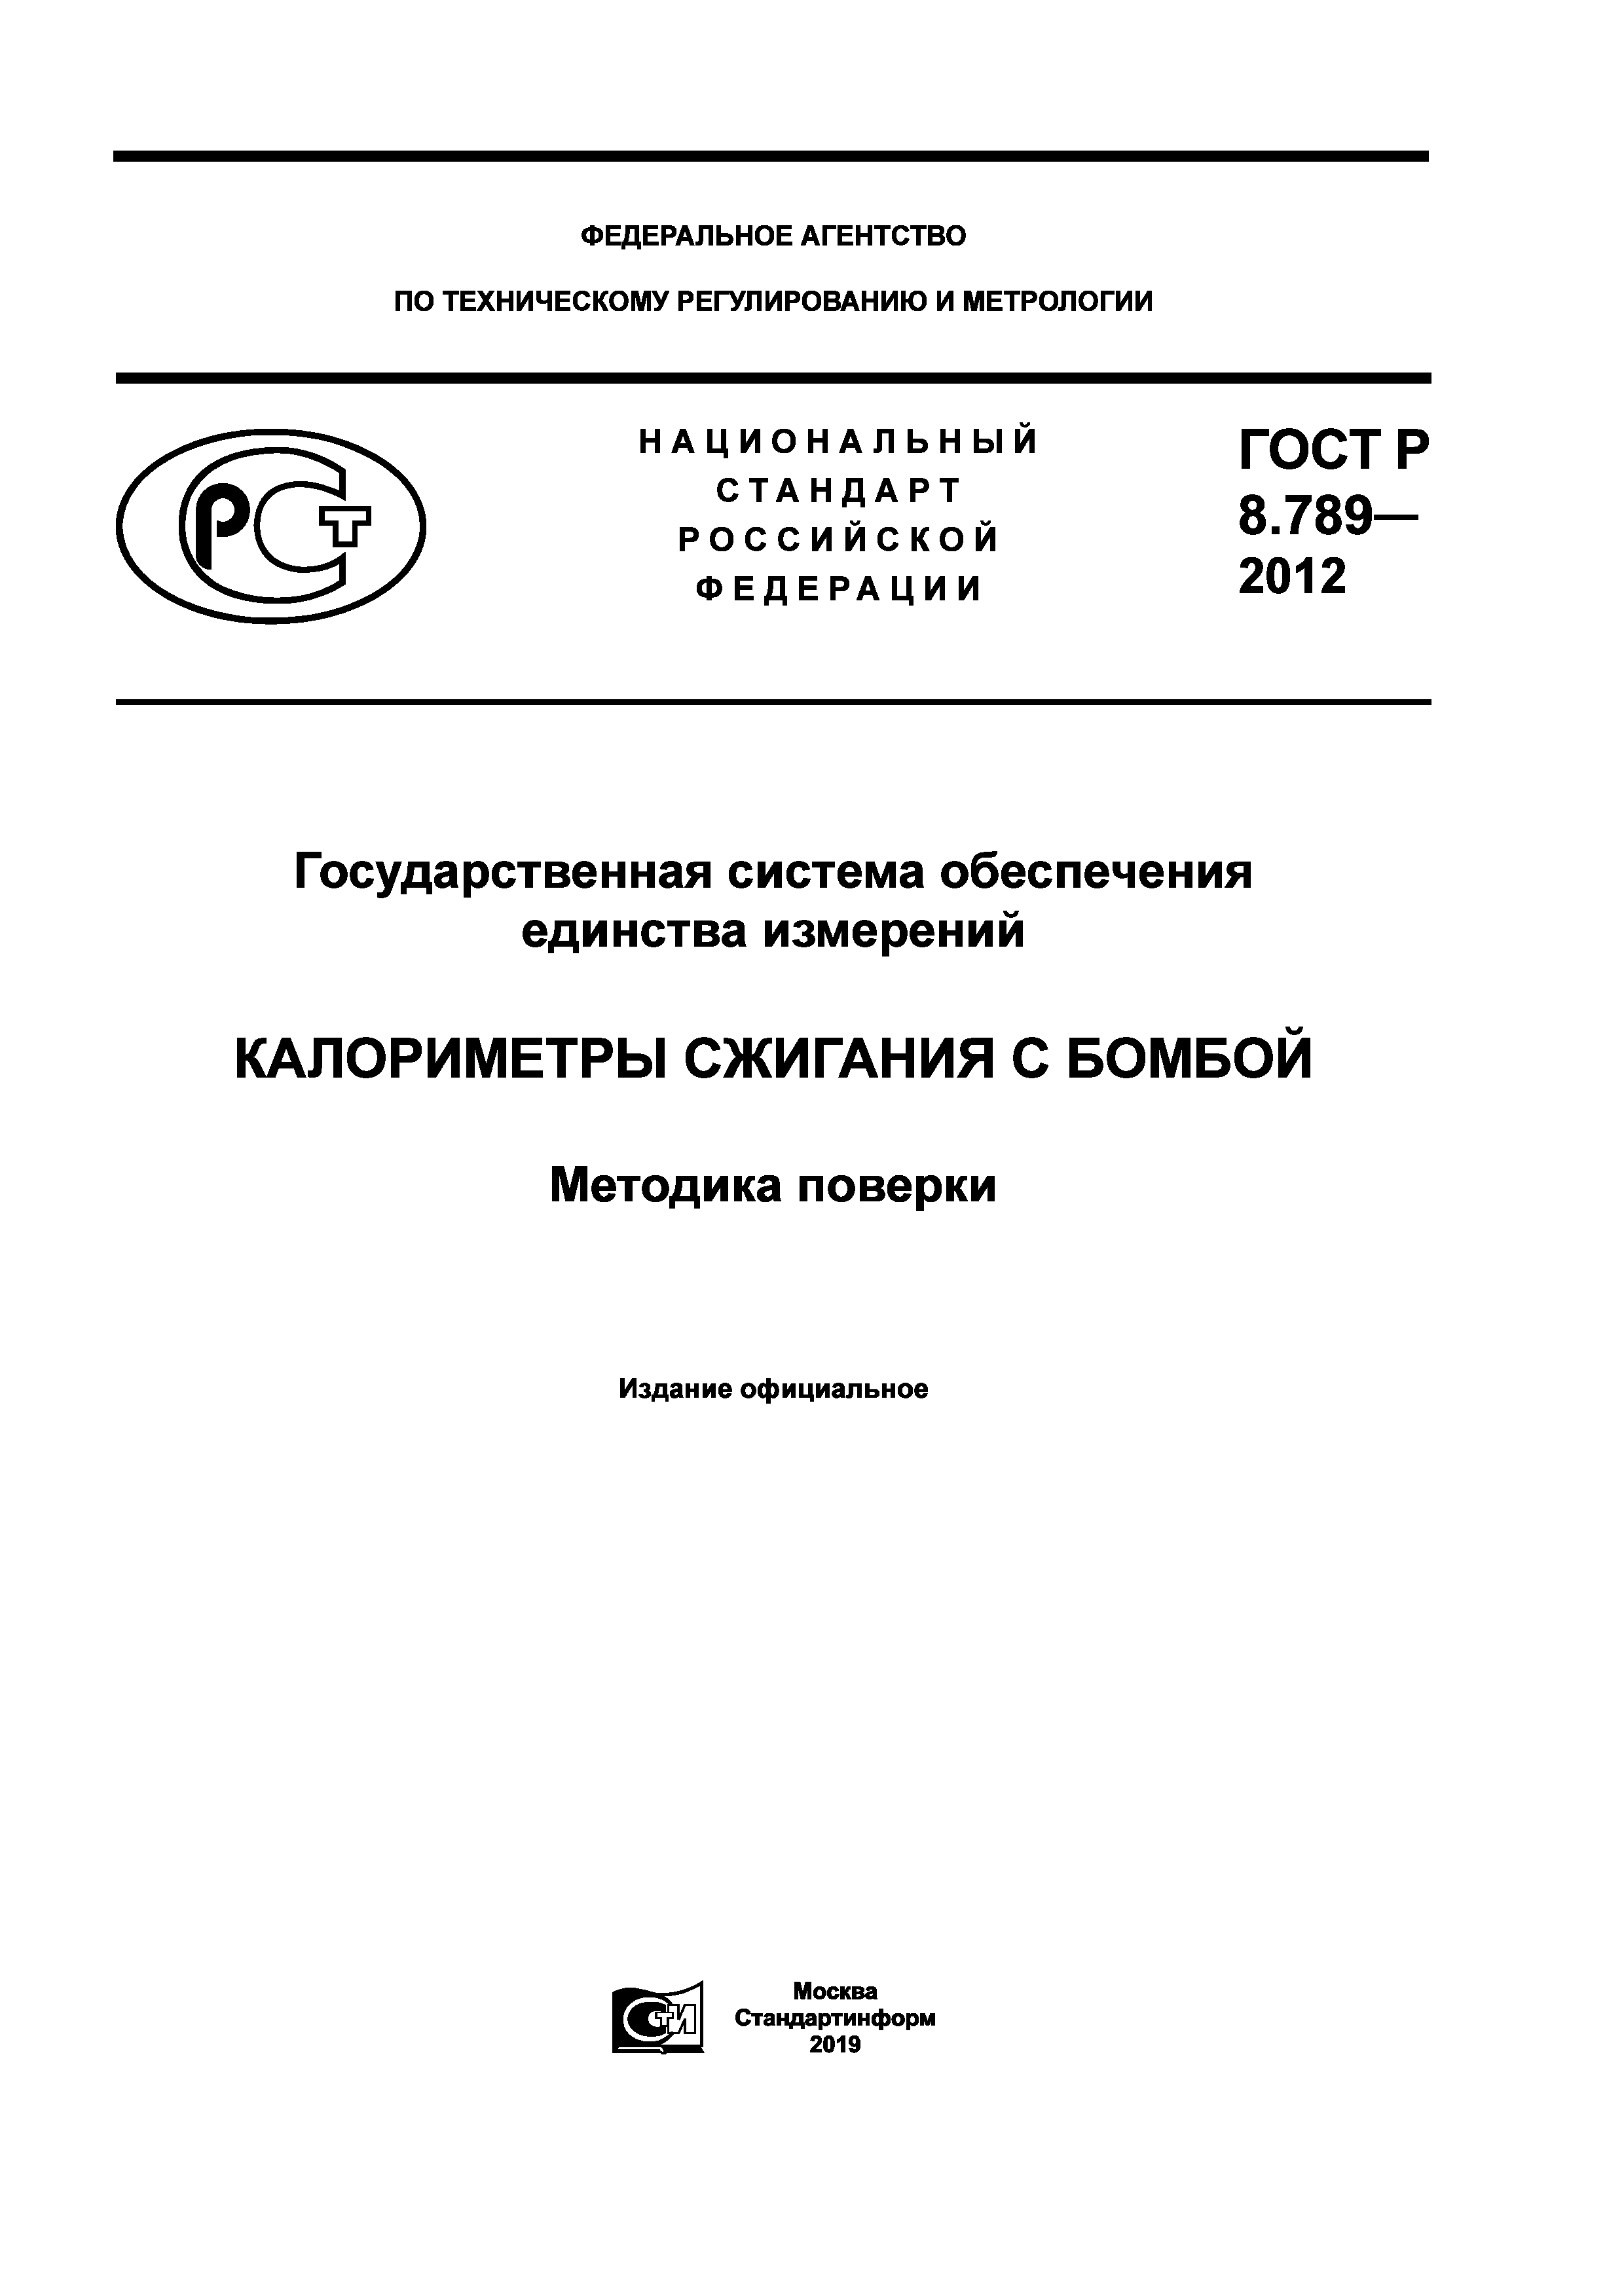 ГОСТ Р 8.789-2012